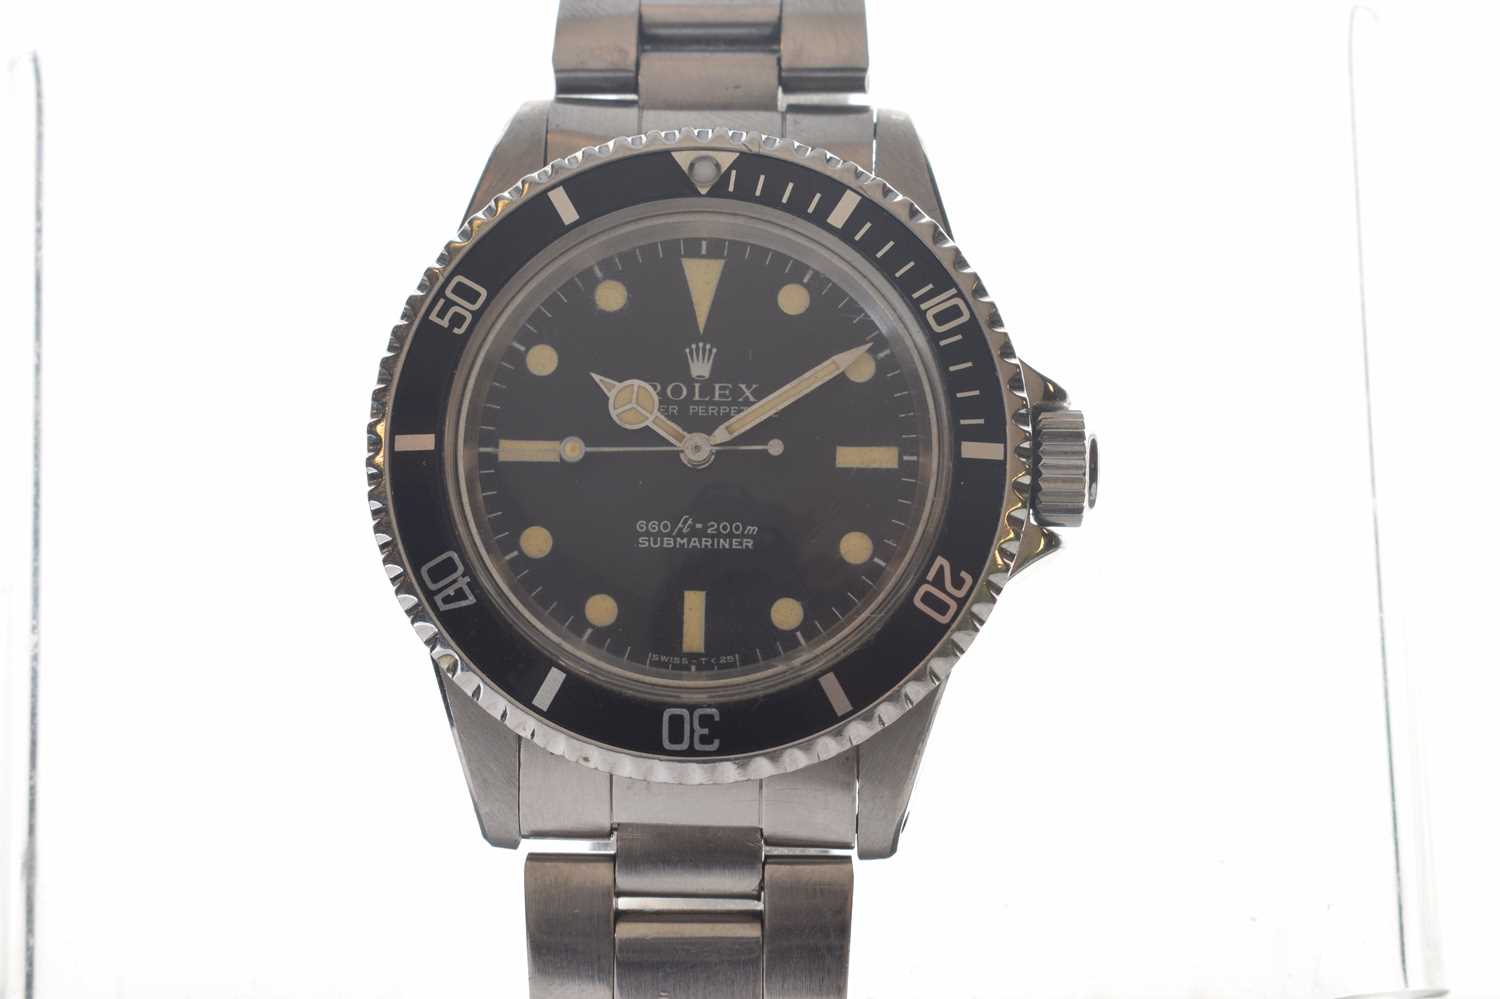 Rolex - Gentleman's Oyster Perpetual Submariner wristwatch, ref.5513 - Image 22 of 38